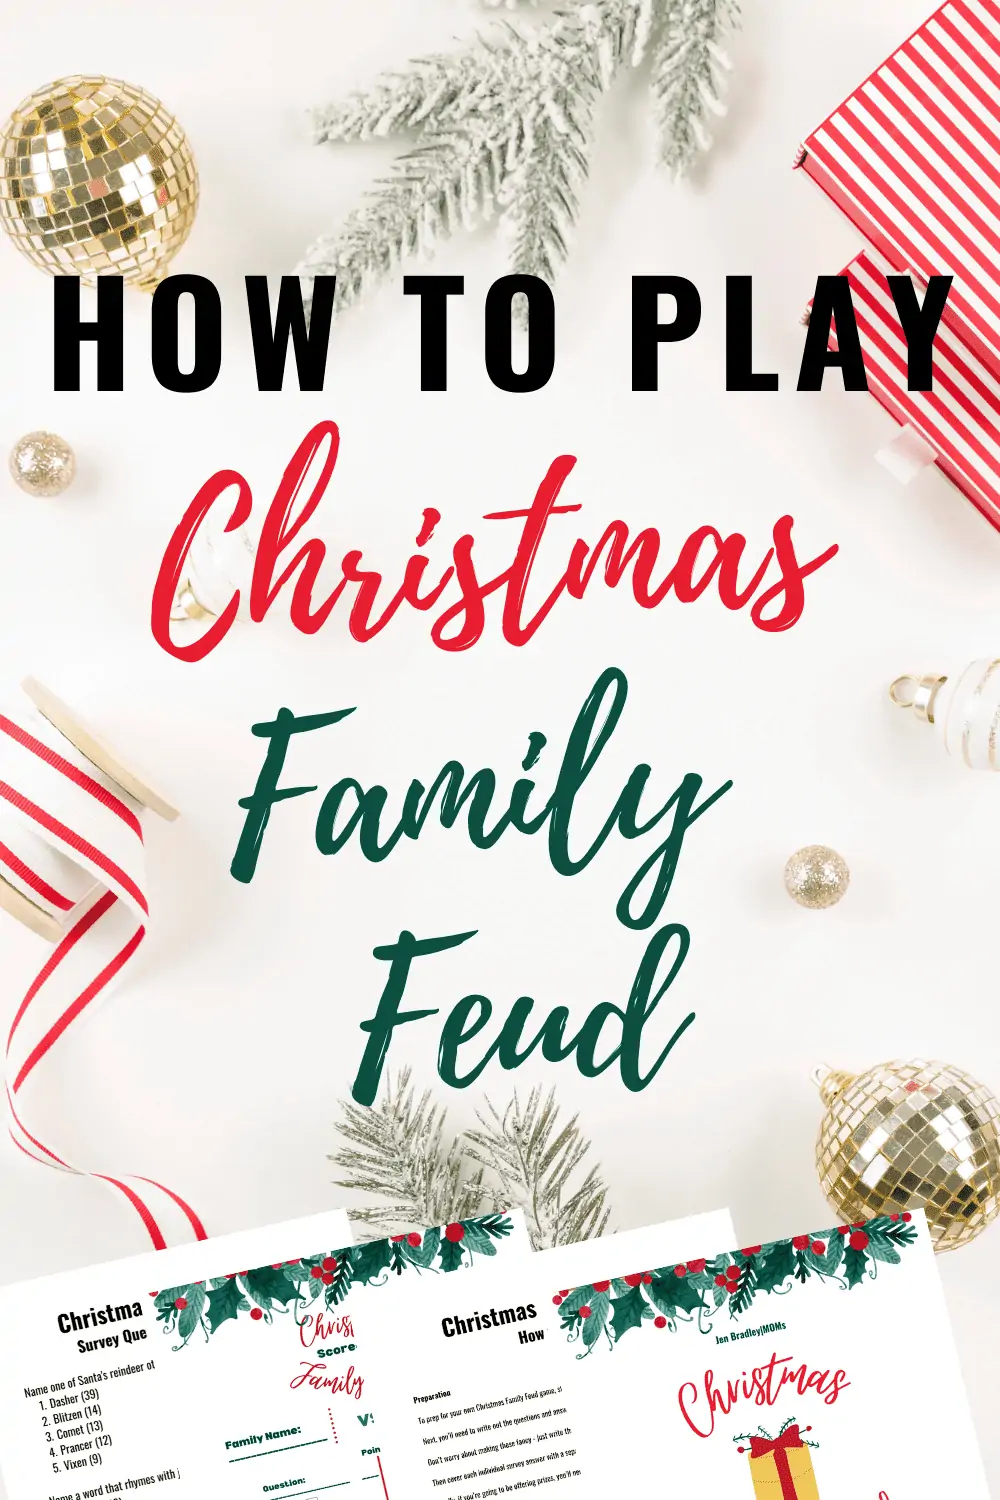 Fun Christmas Family Feud - How to Play and Free Printable!